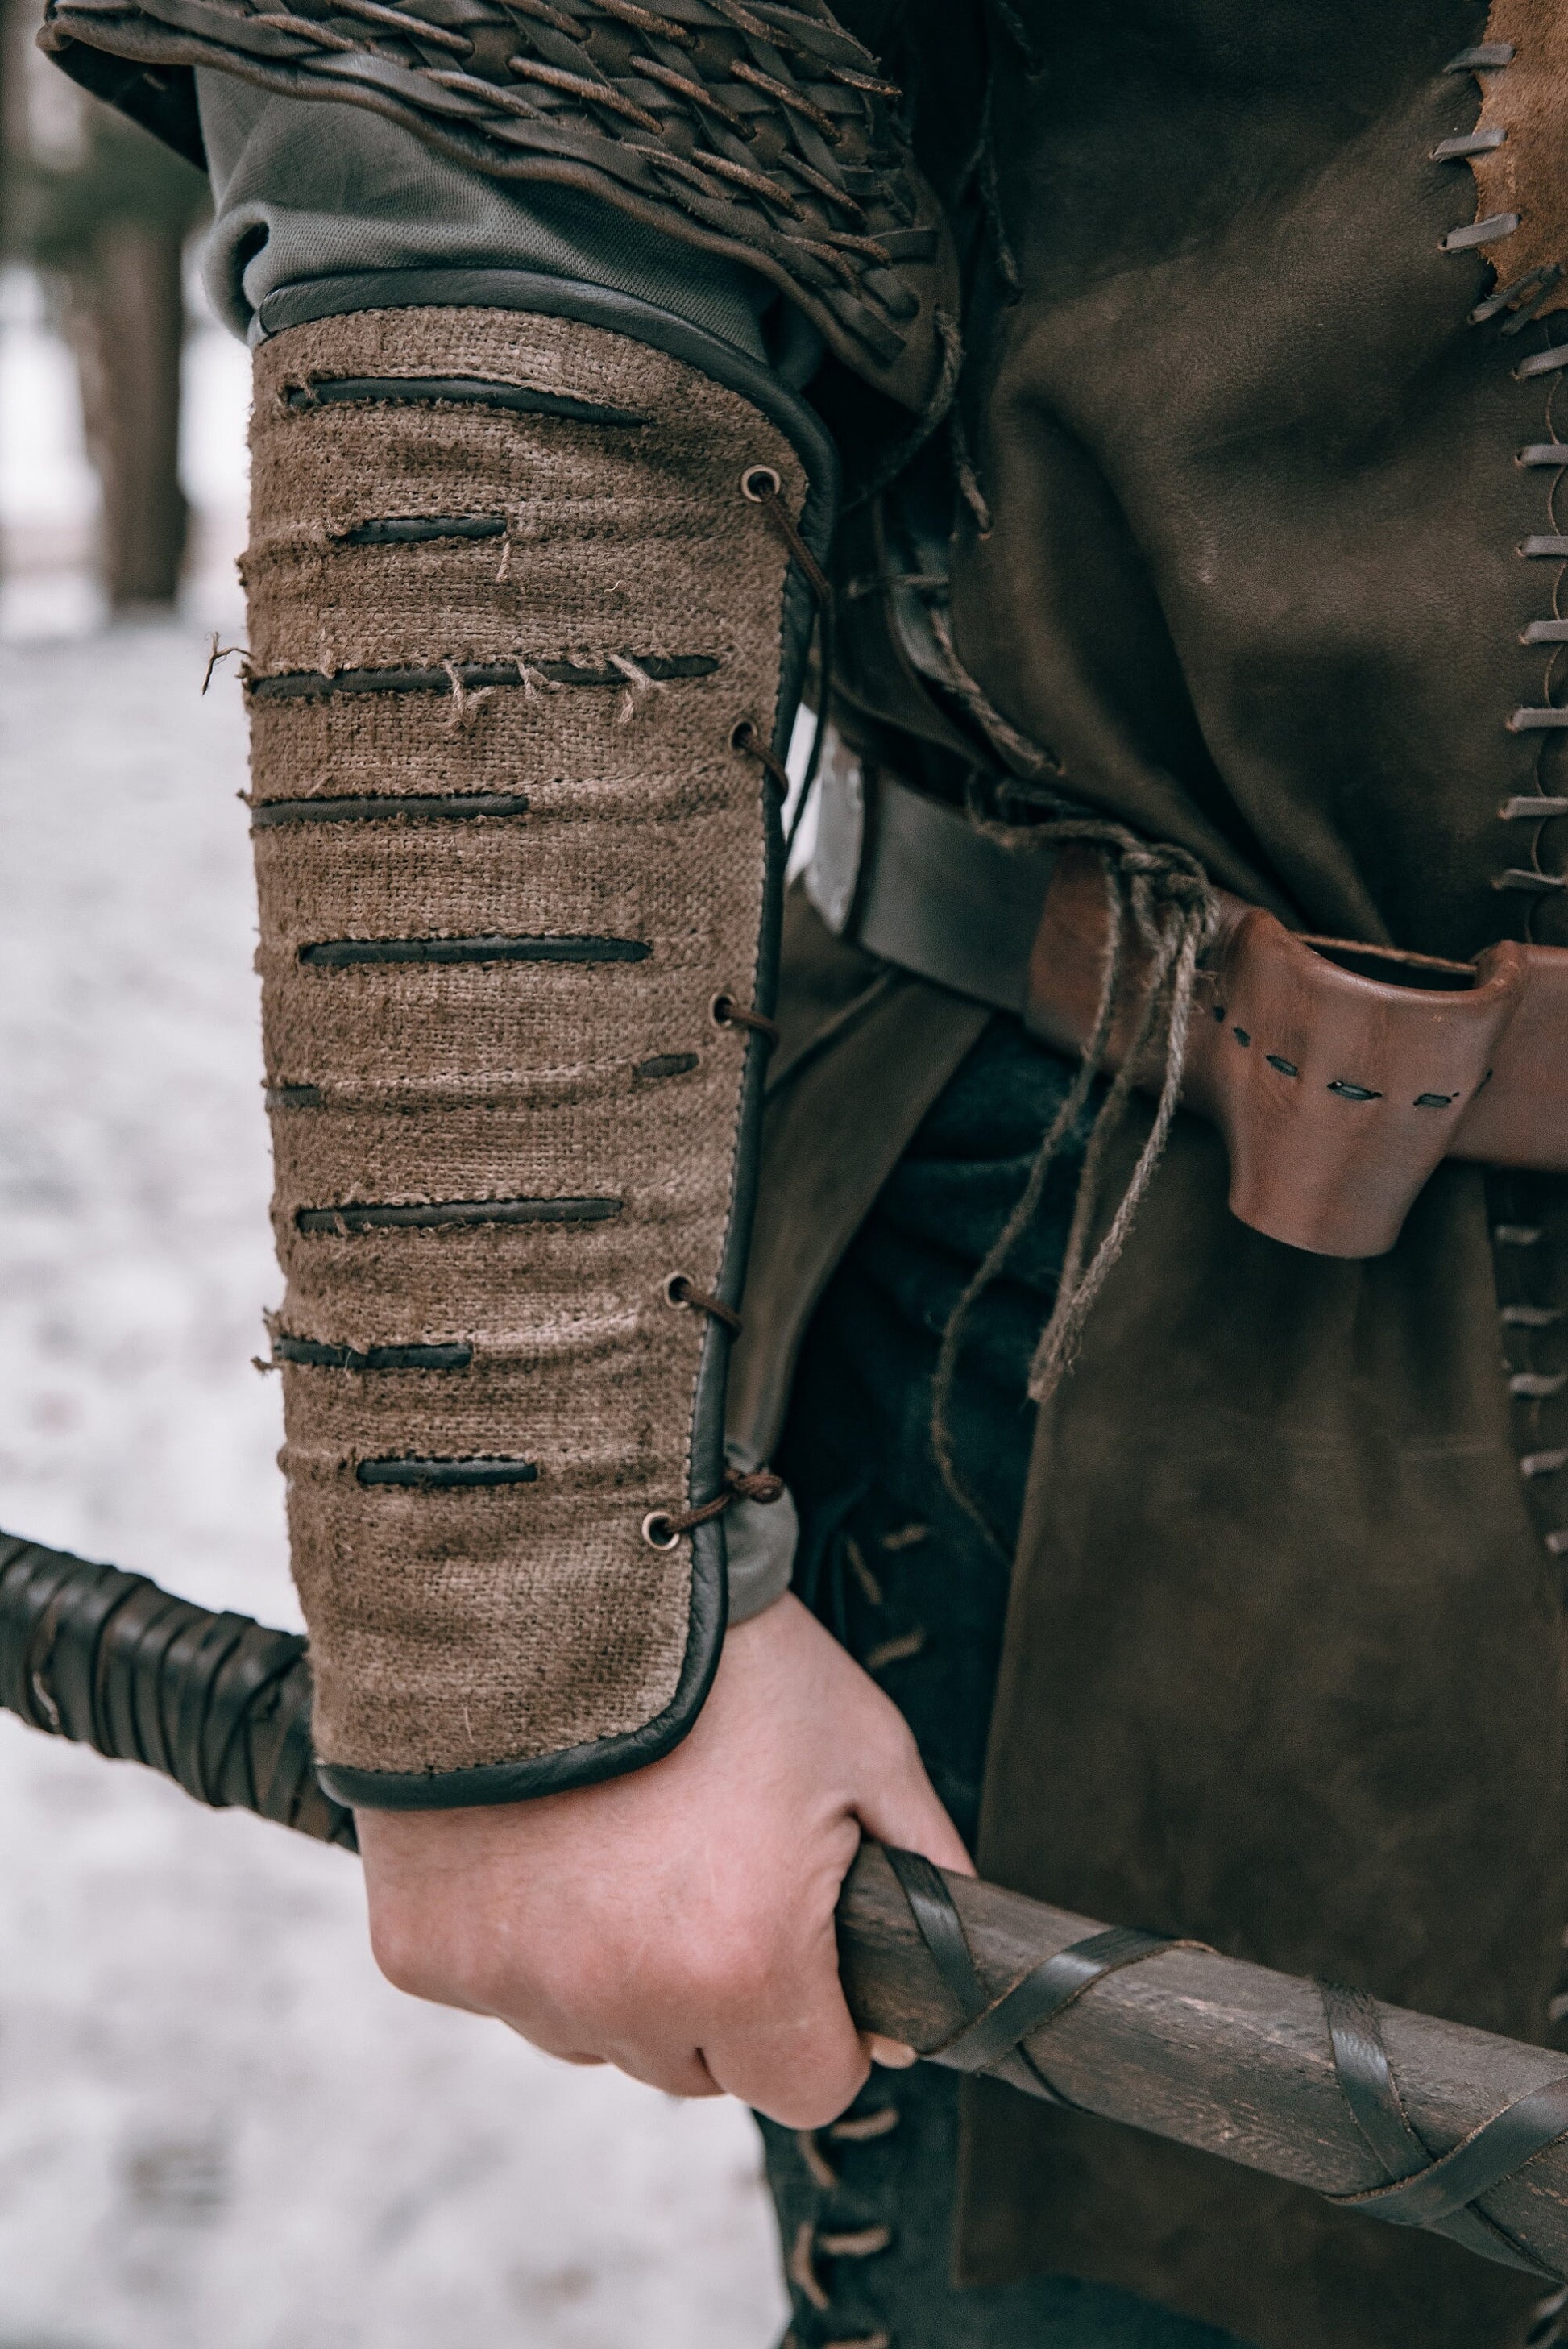 ⭐ Viking Genuine Leather Bracers - Medieval Shop at House of Warfare